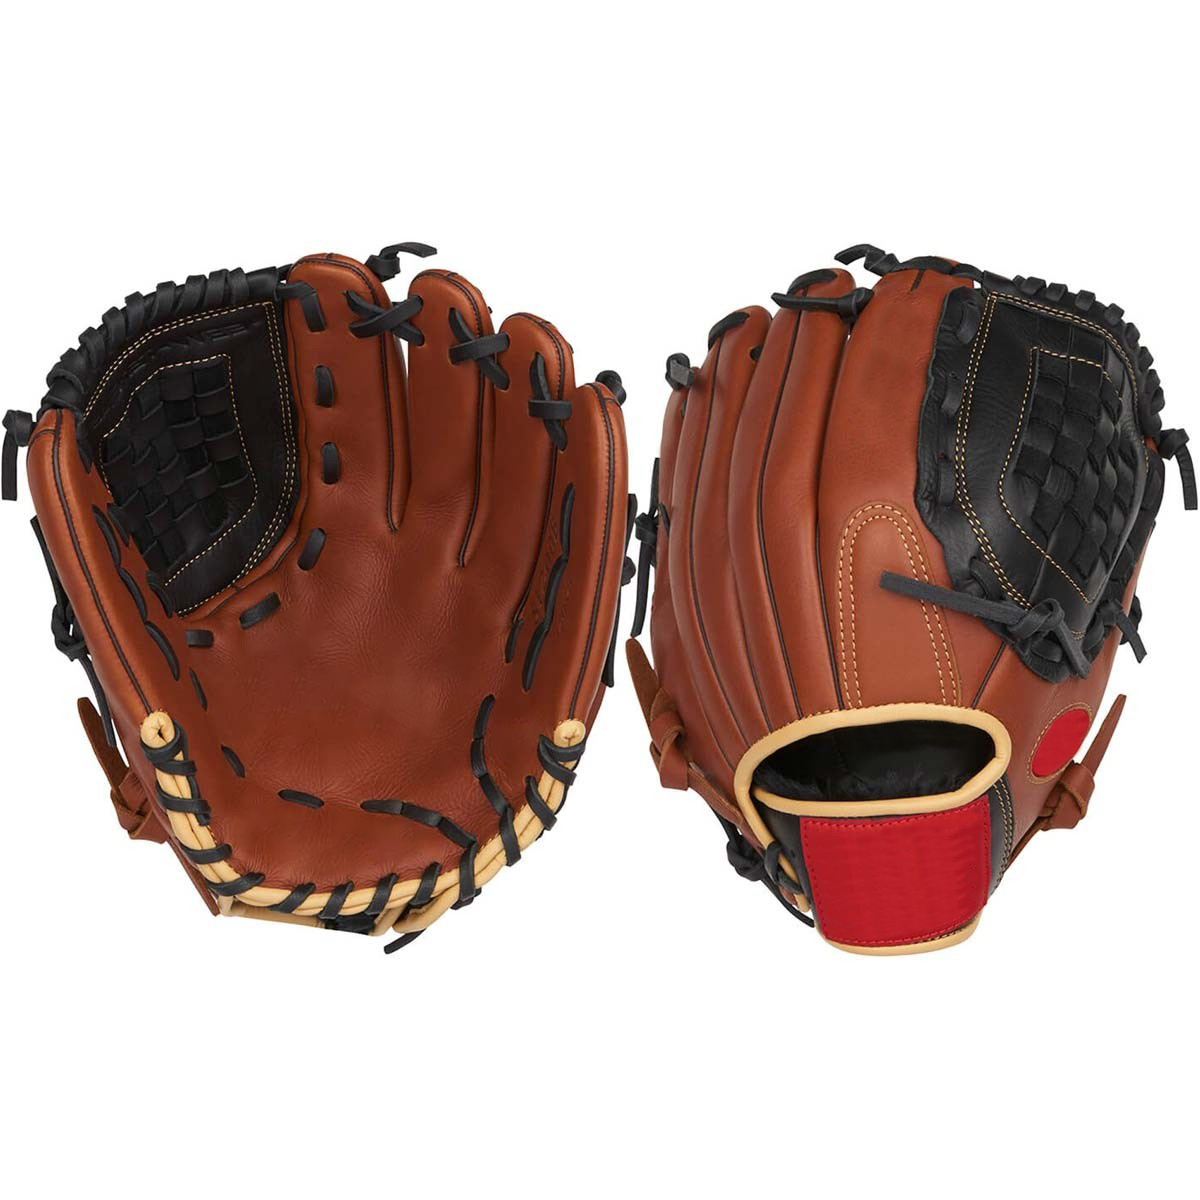 Full leather basket web 12" right hand throw baseball gloves